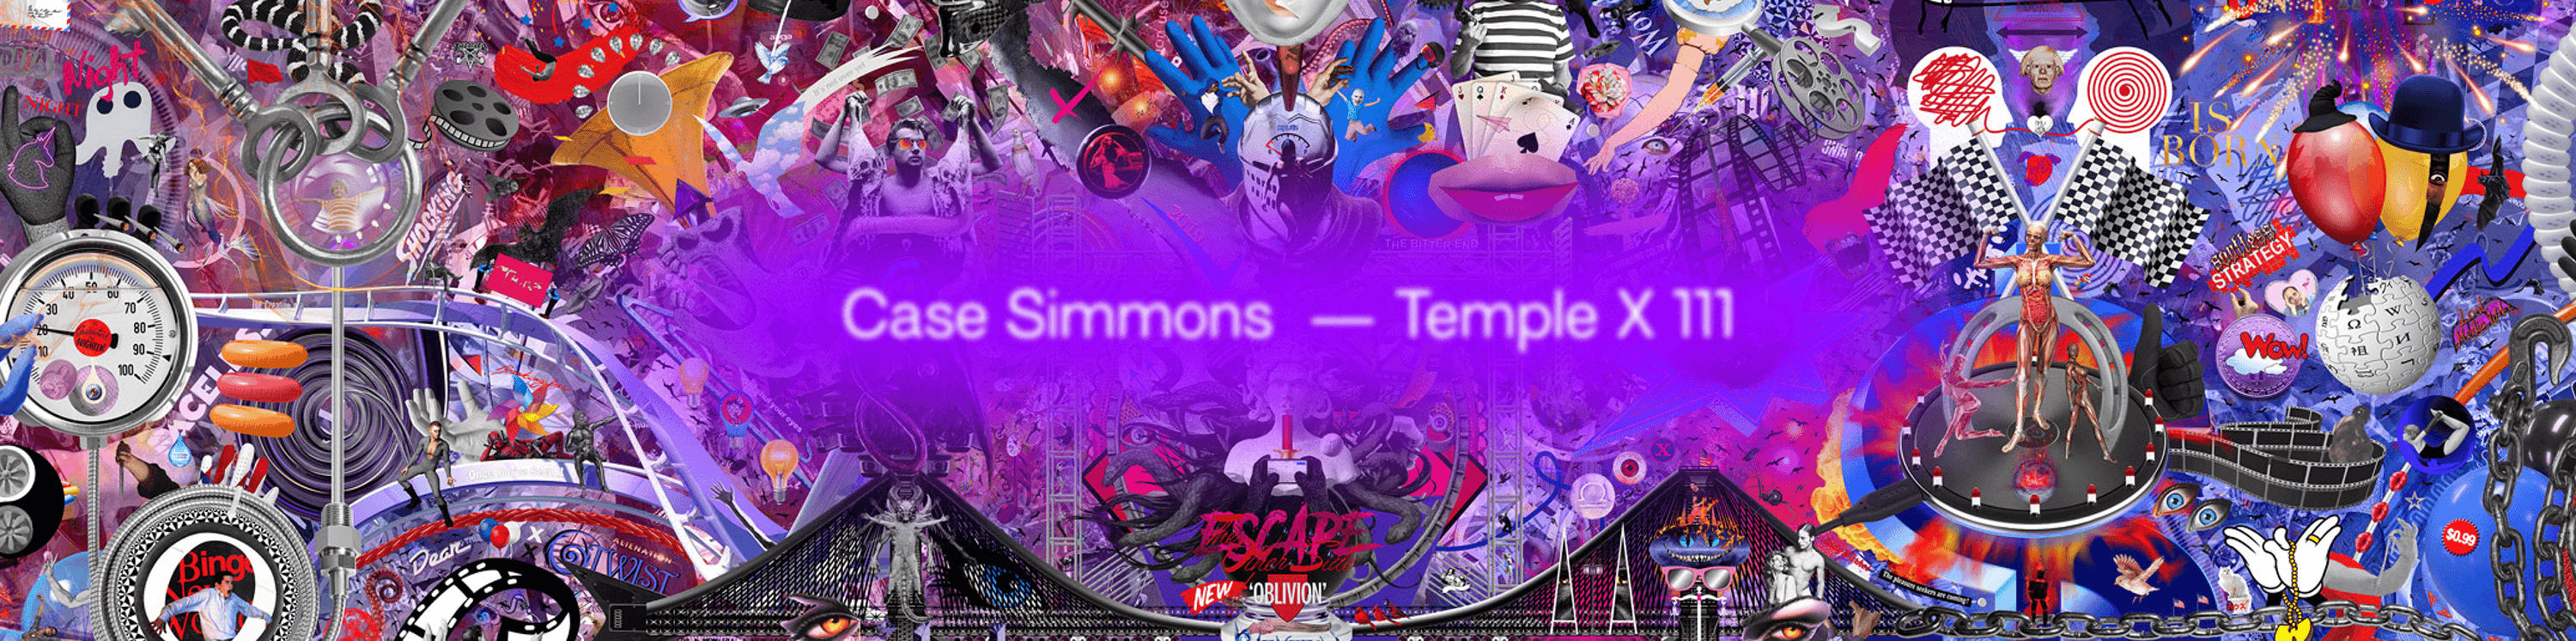 Case Simmons - Temple X 111